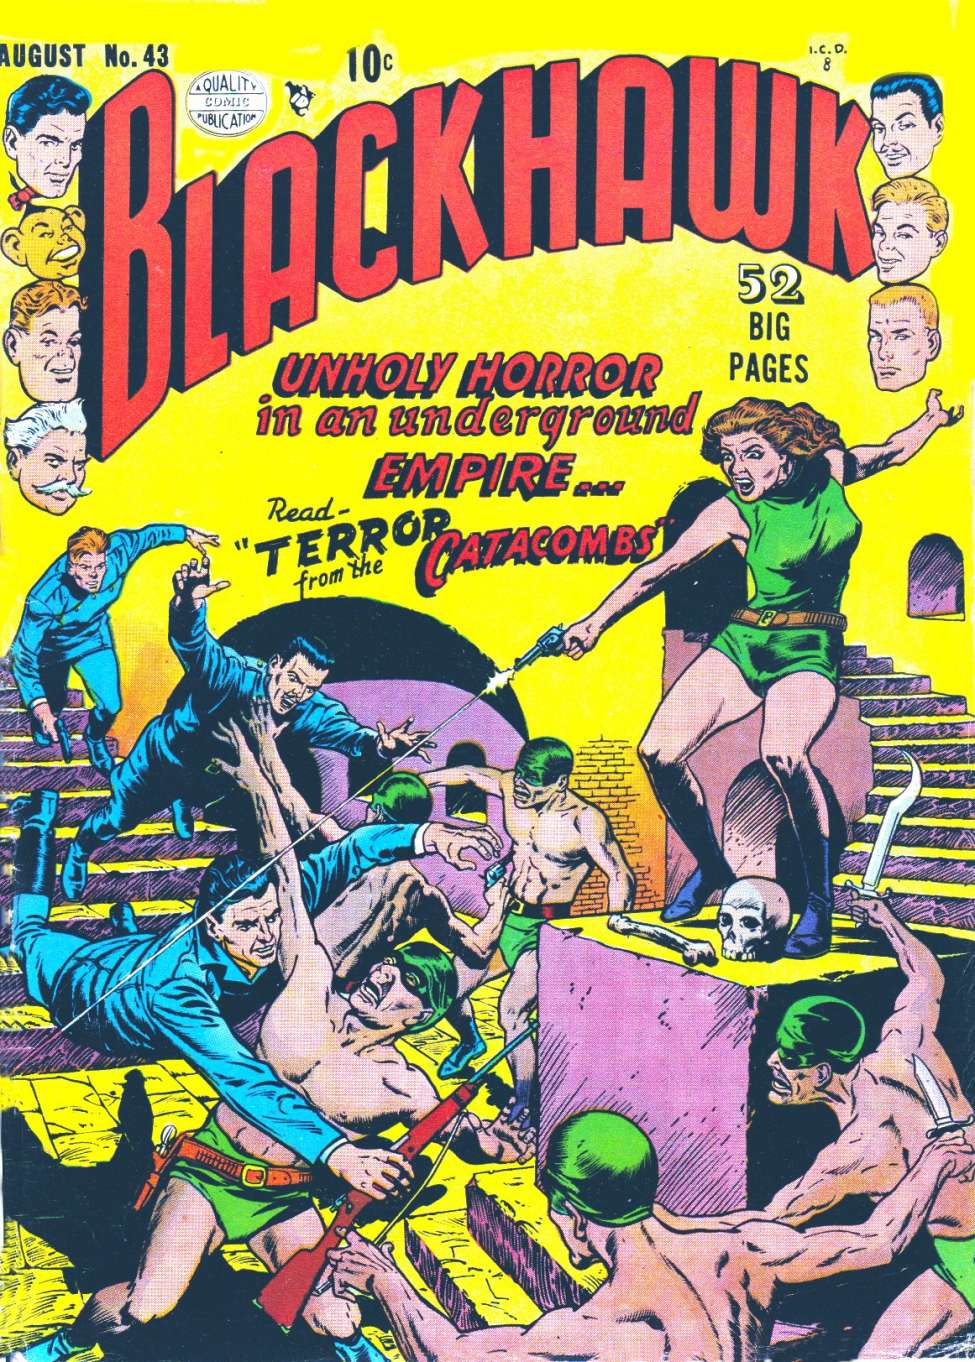 Book Cover For Blackhawk 43